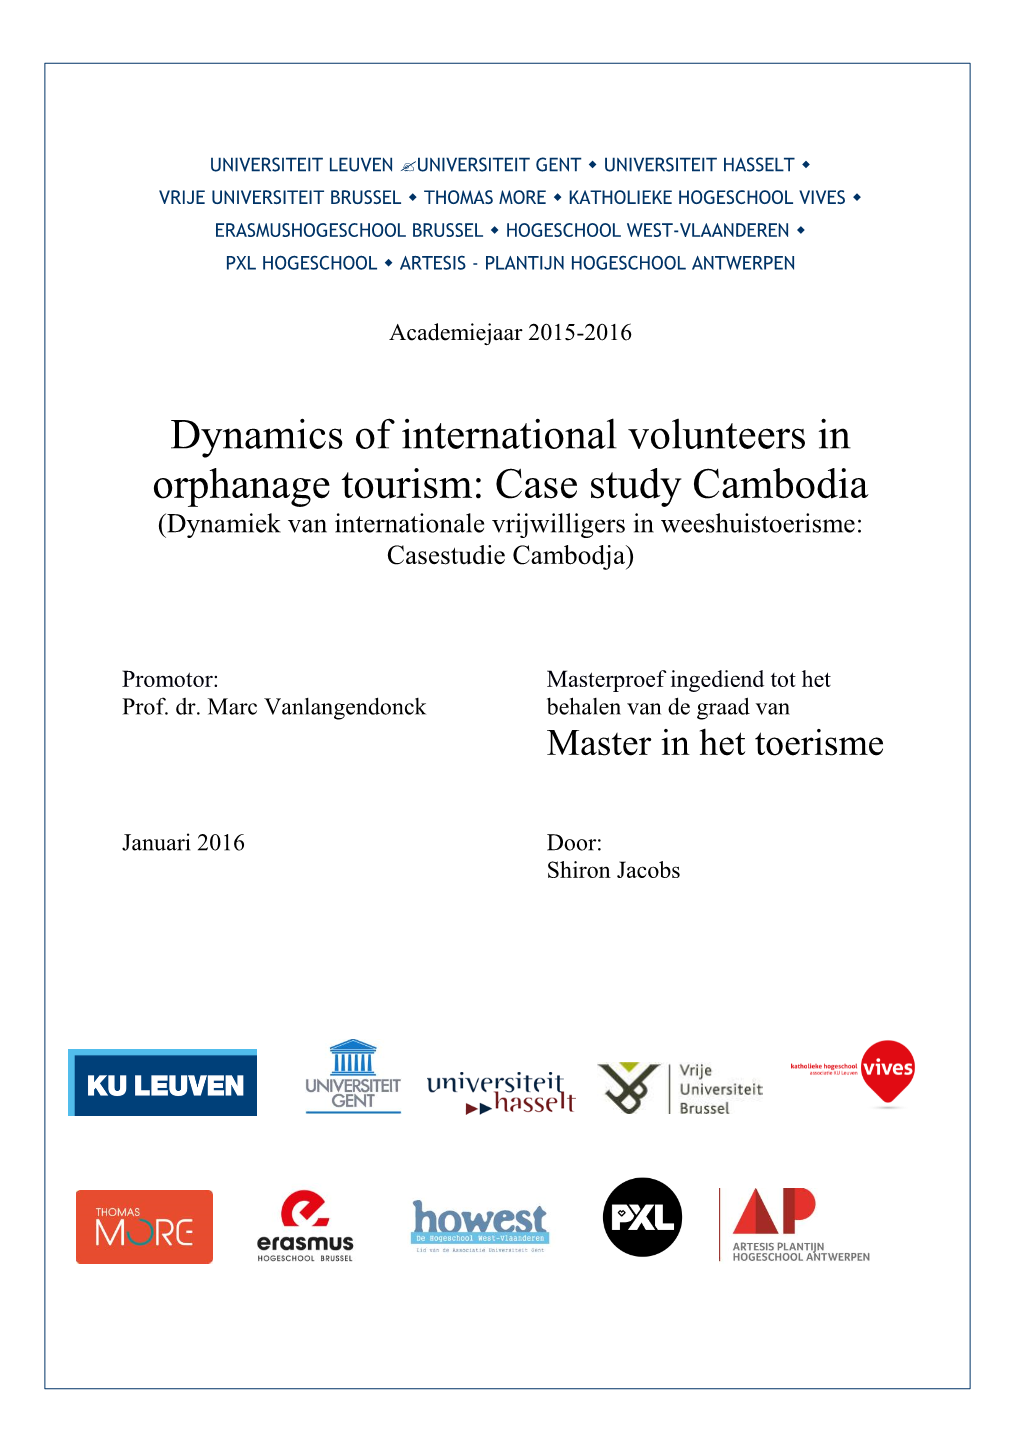 Dynamics of International Volunteers in Orphanage Tourism: Case Study Cambodia (Dynamiek Van Internationale Vrijwilligers in Weeshuistoerisme: Casestudie Cambodja)